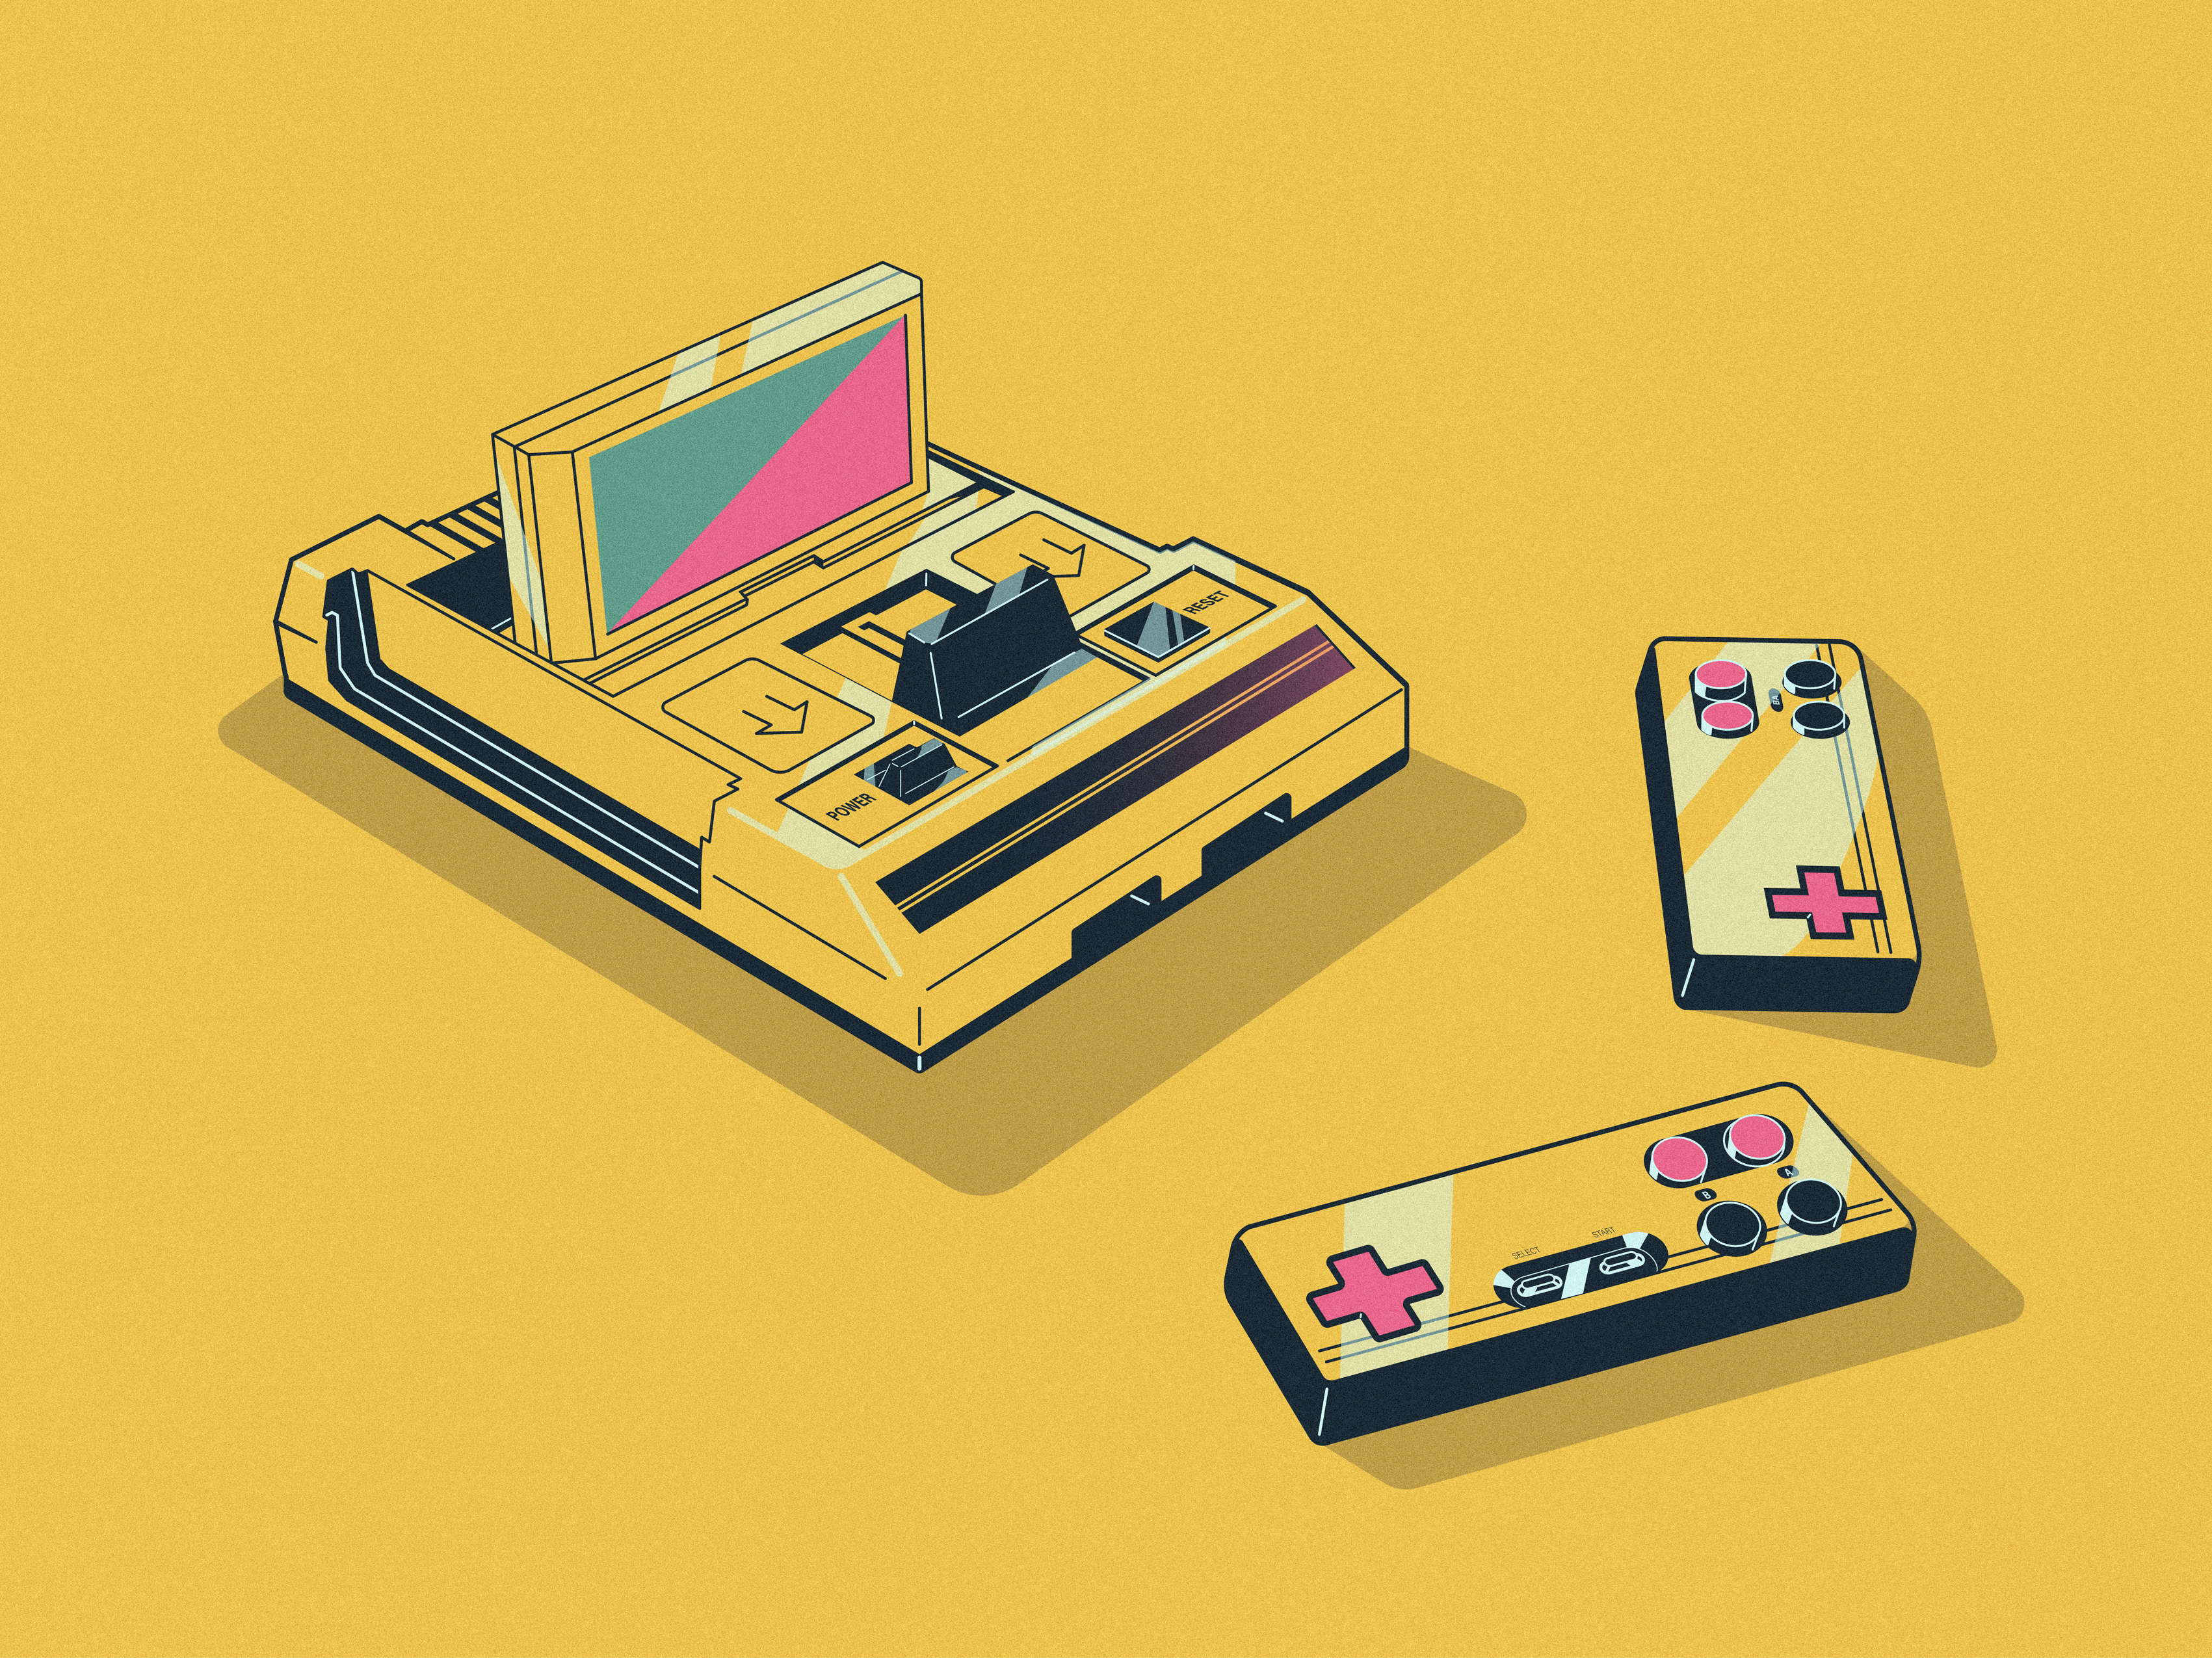 Мини игра 8 бит. Приставка Нинтендо 90-х. Игровая приставка Nintendo 8 бит. Нинтендо 8 бит консоль. Джойстик Нинтендо 8 бит.